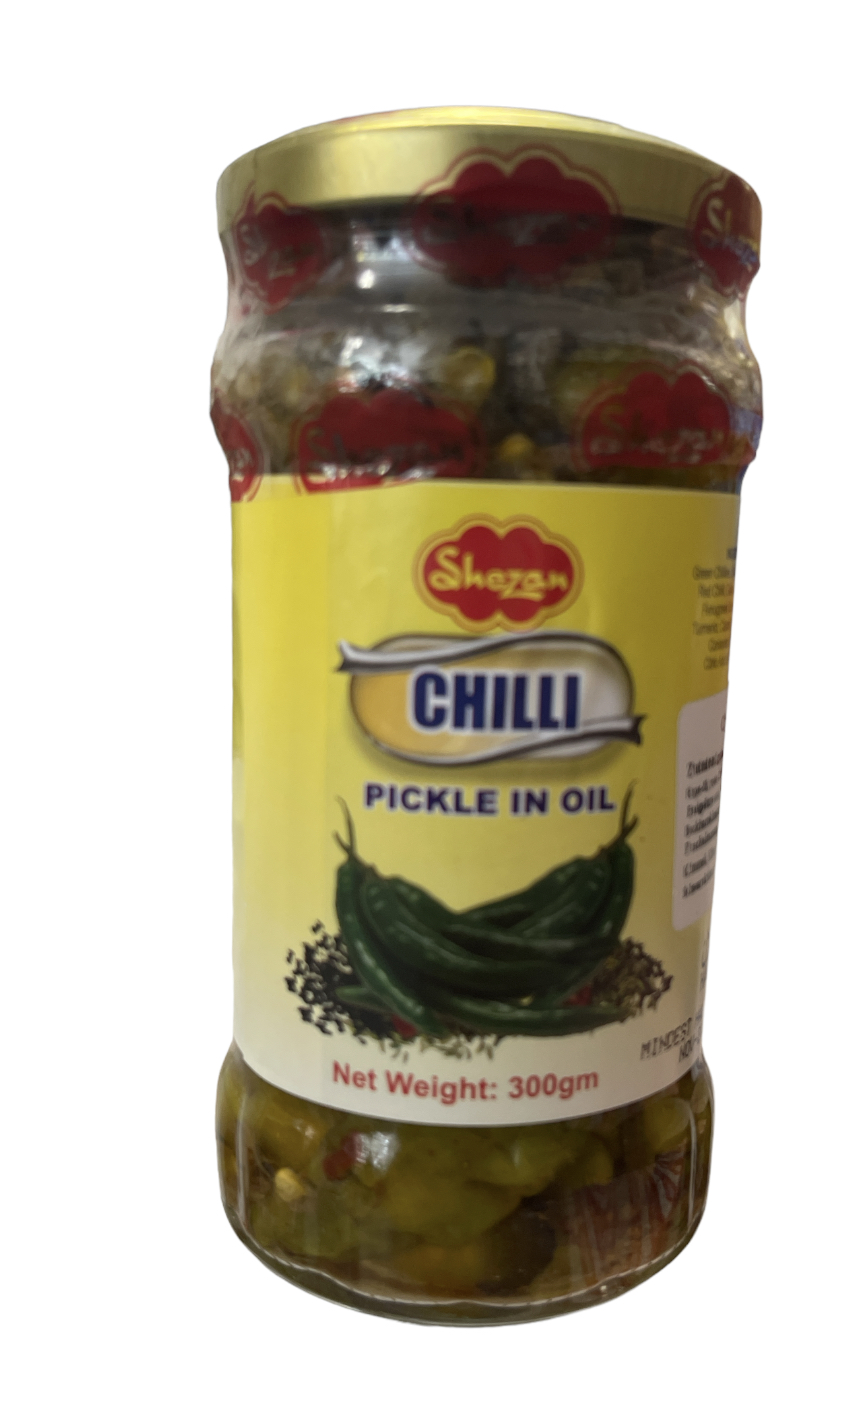 Shezan Chilli Pickle in Oil 300g